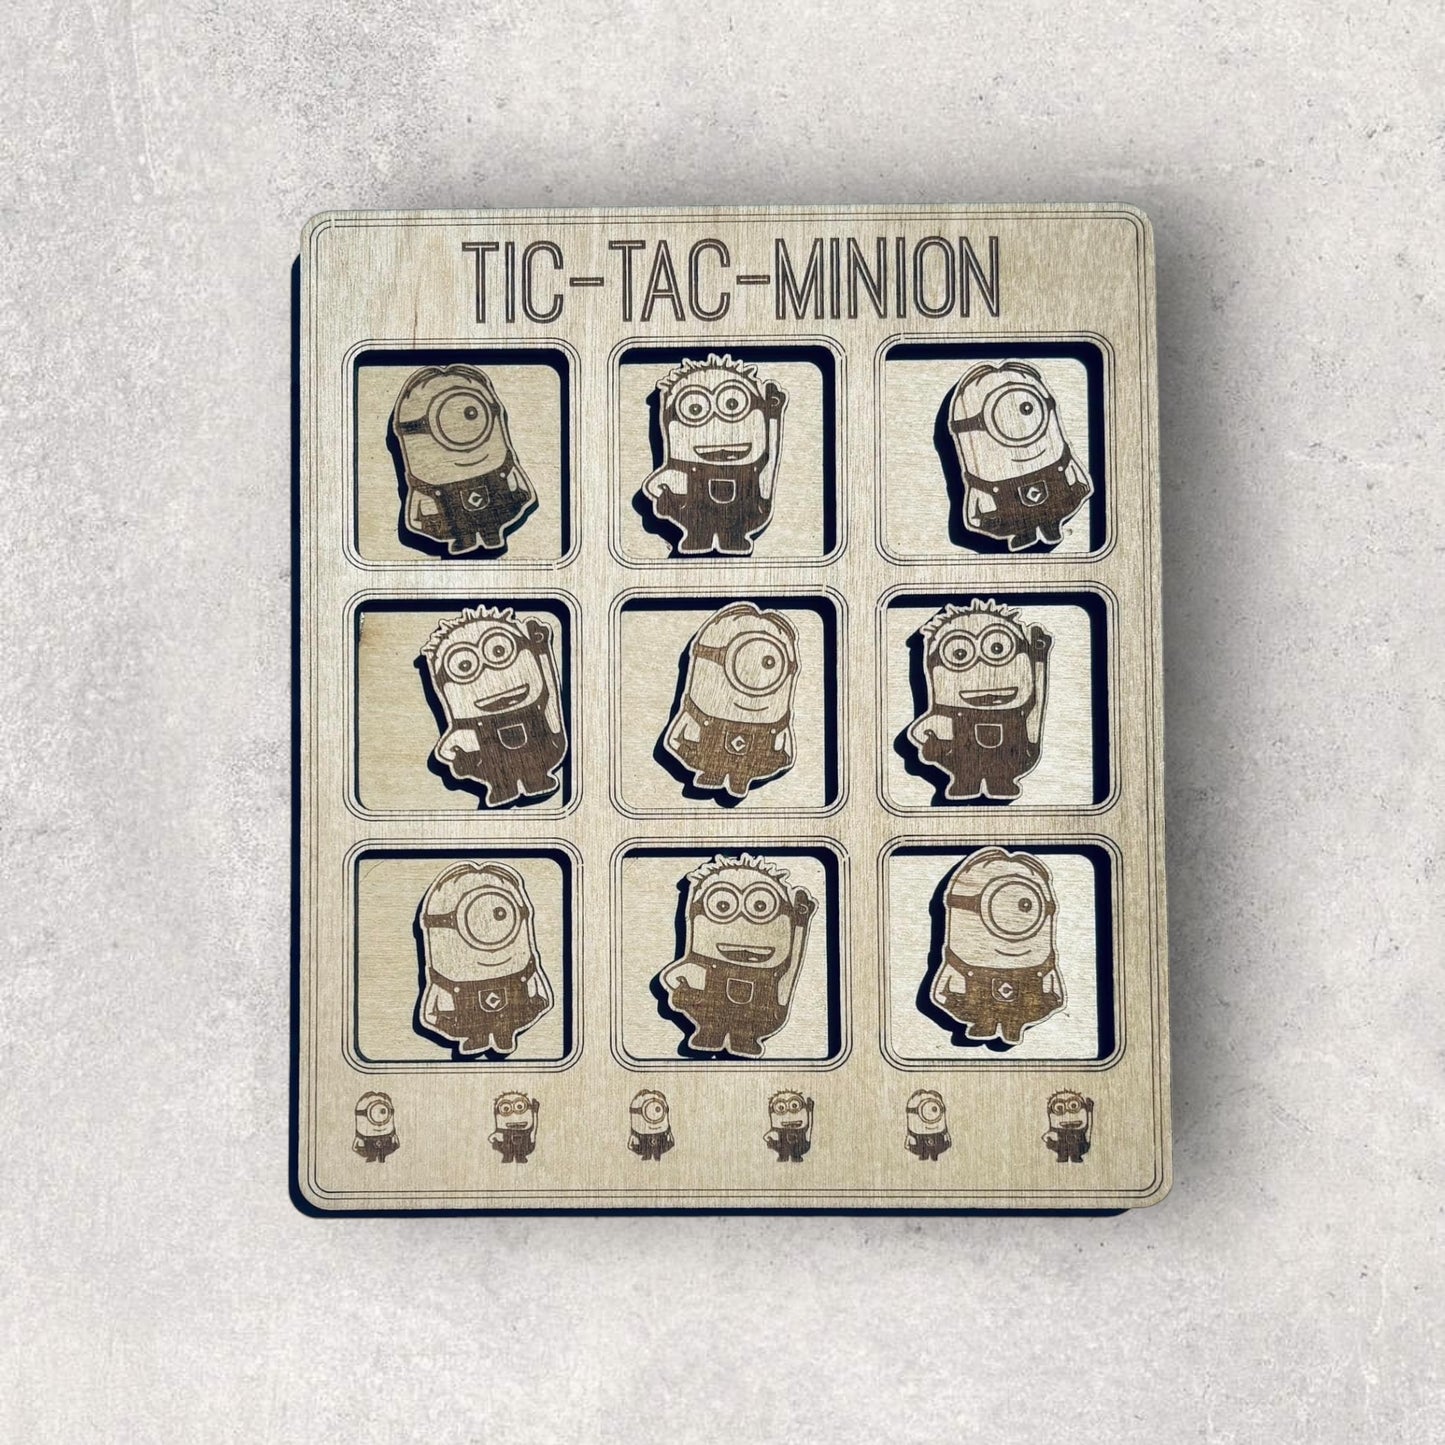 Themed Tic Tac Toe Games